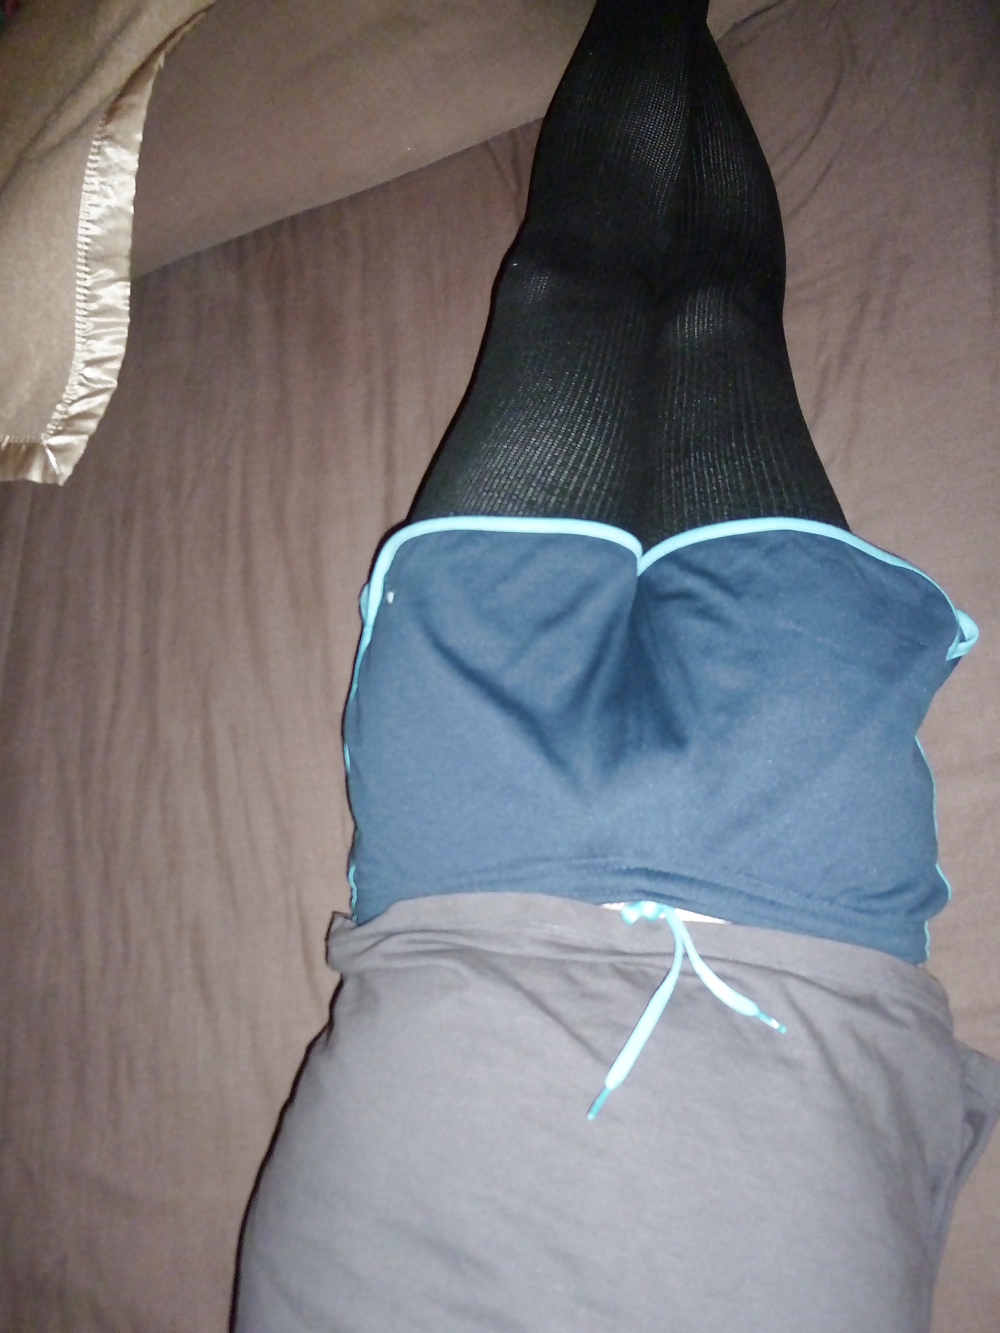 Showing some sporty shorts socks stuff  #5089572